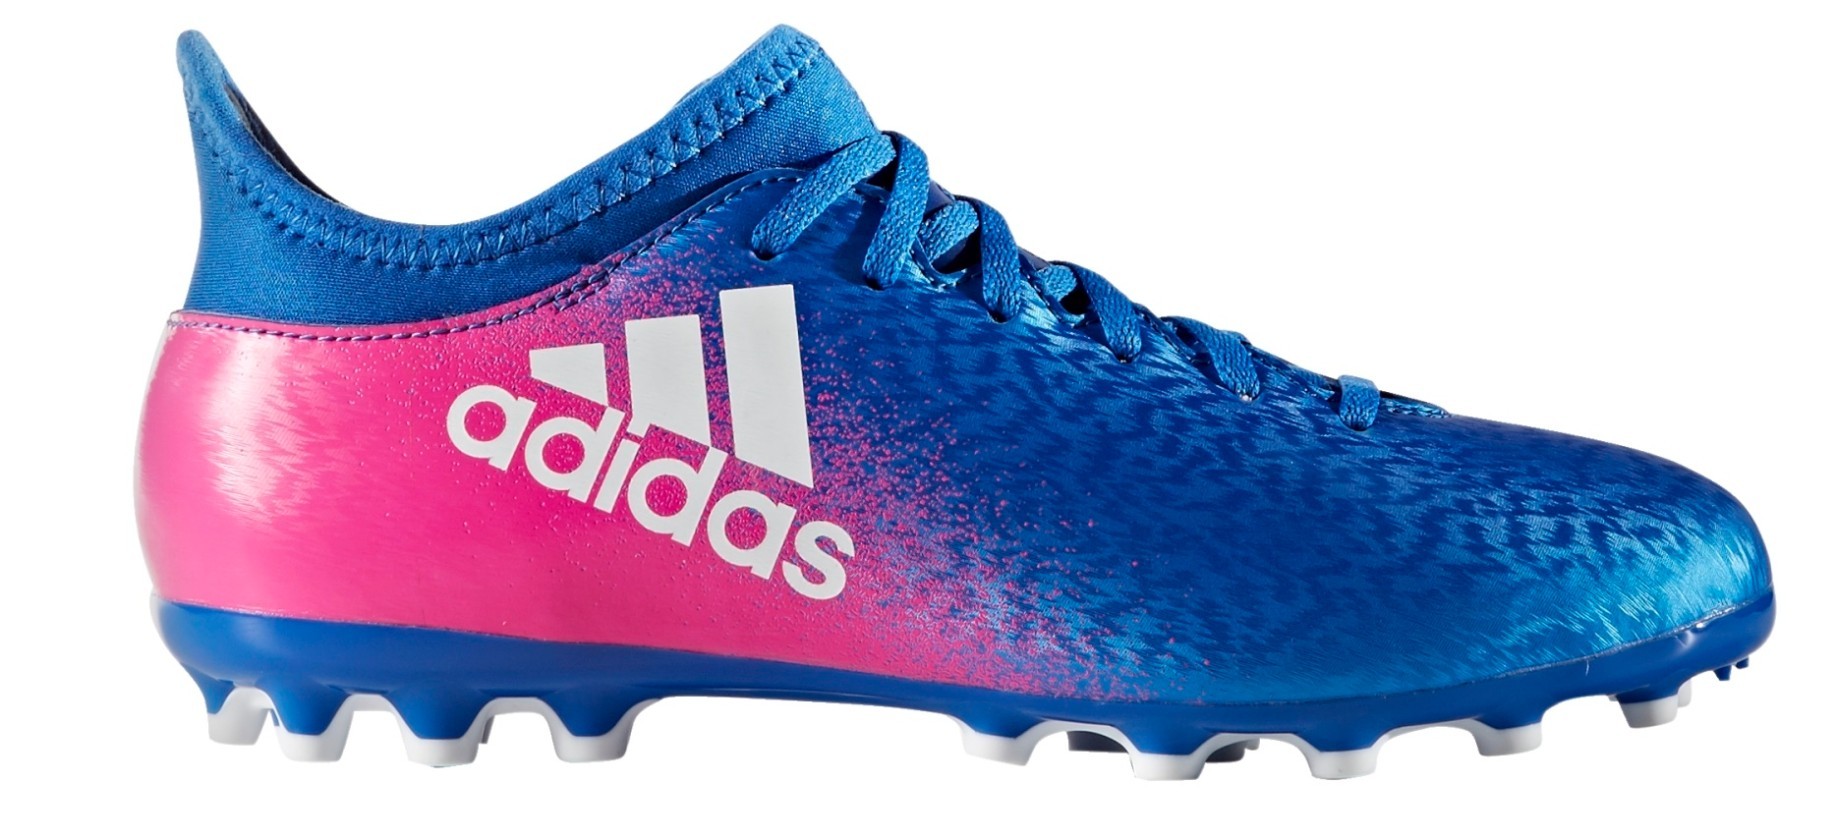 Scarpe Calcio Ragazzo Adidas X 16.3 AG Blue Blast Pack colore Blu Rosa -  Adidas - SportIT.com